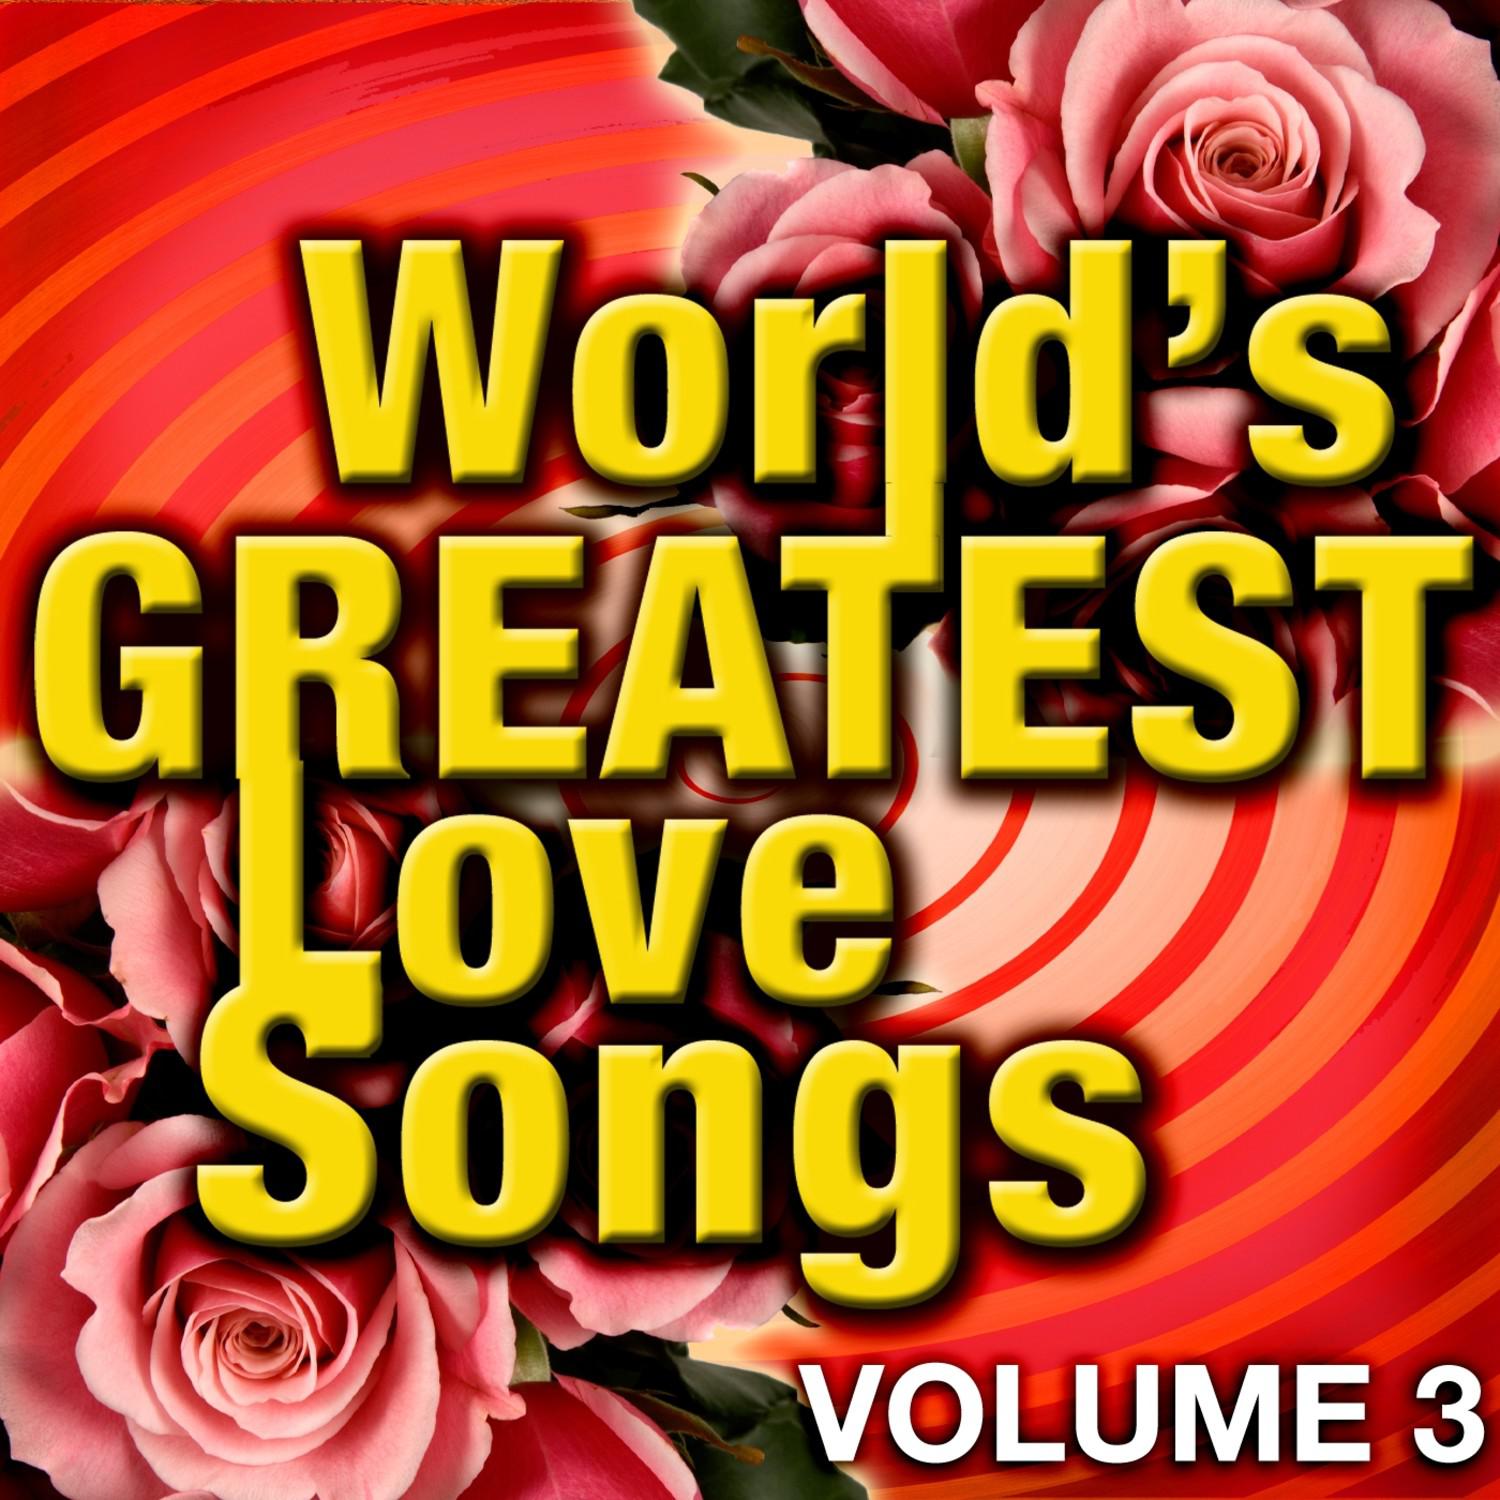 World's Greatest Love Songs - Vol. 3